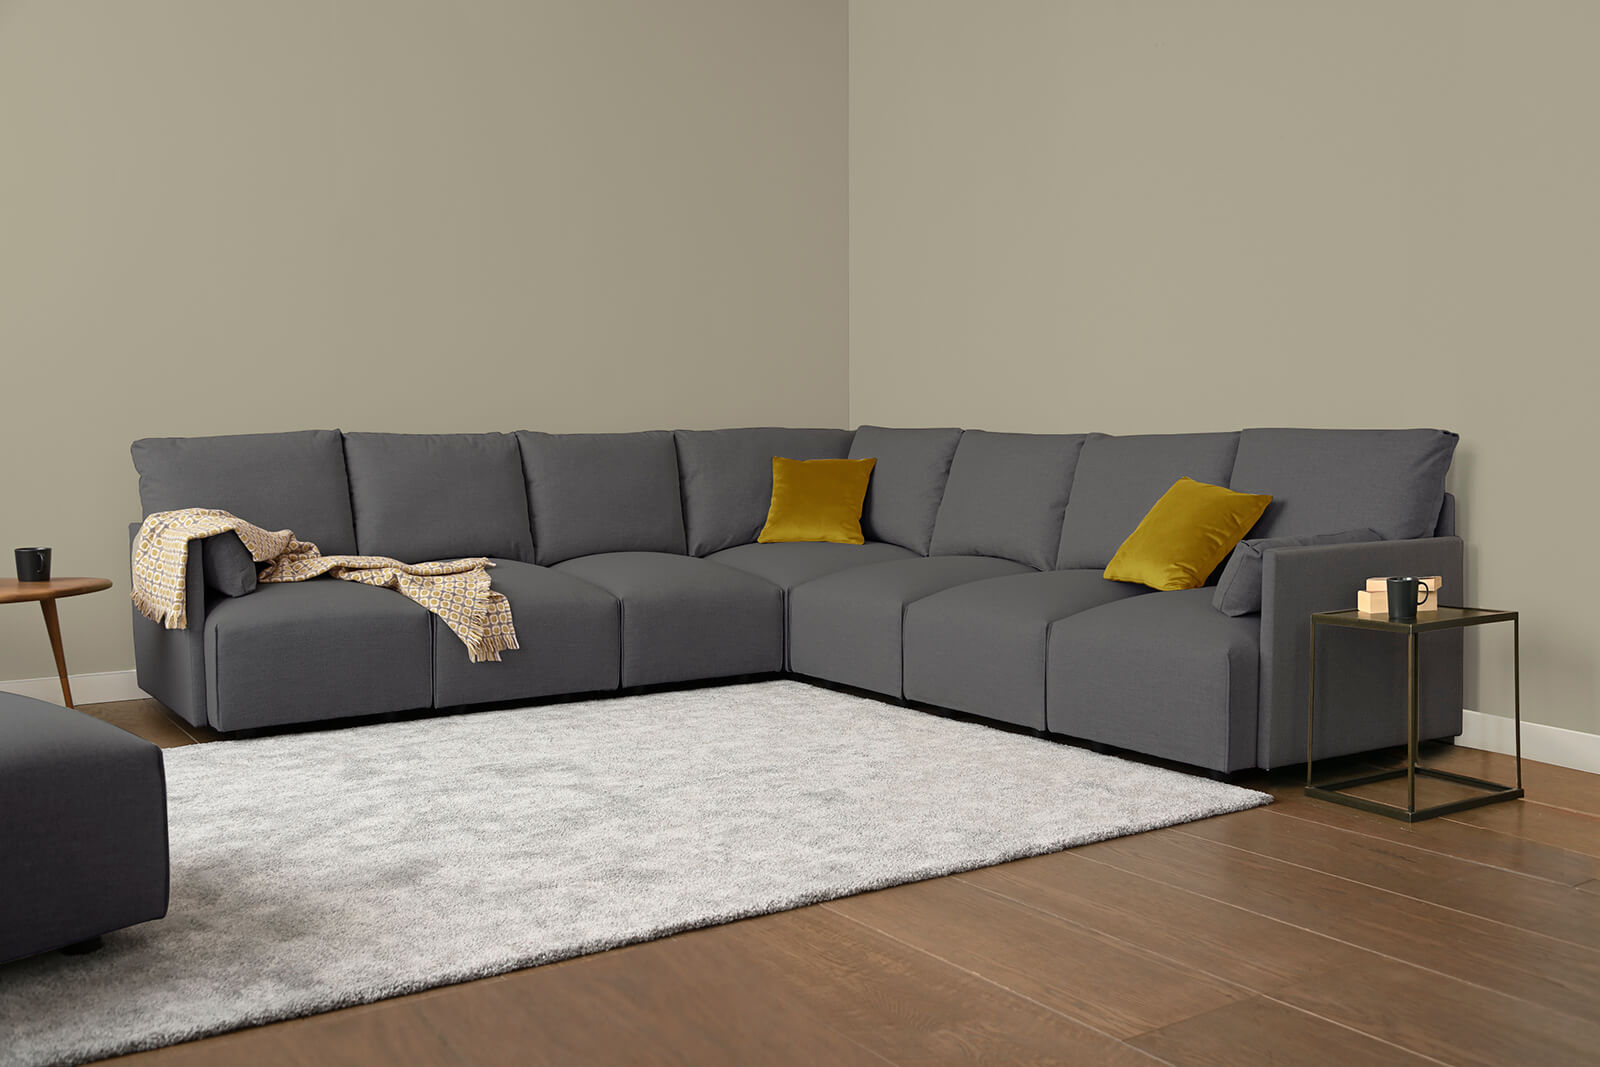 HB04-large-corner-sofa-3q-seal-4x4-lifestyle